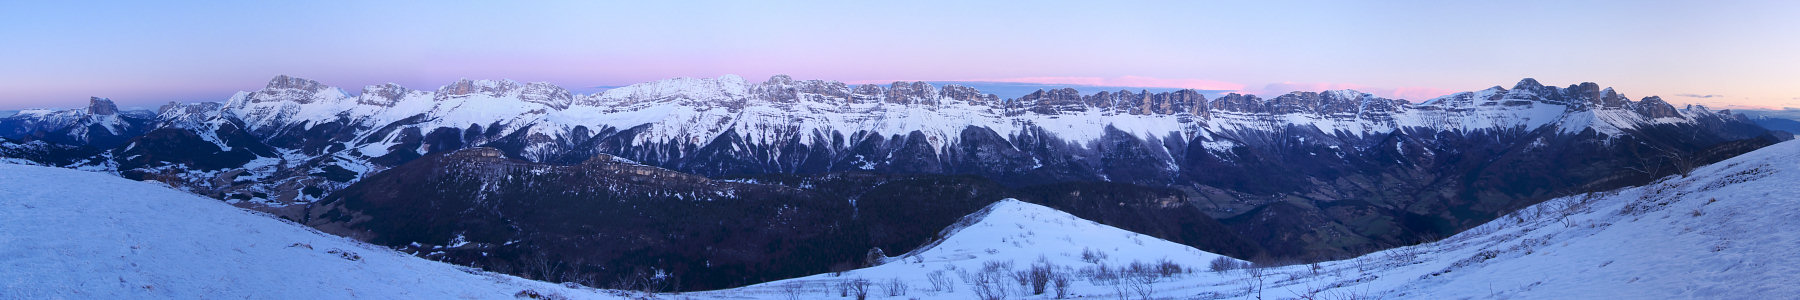 [20090403_071235_VercorsAlpenglowPano_.jpg]
Alpenglow on the east face of the Vercors range.